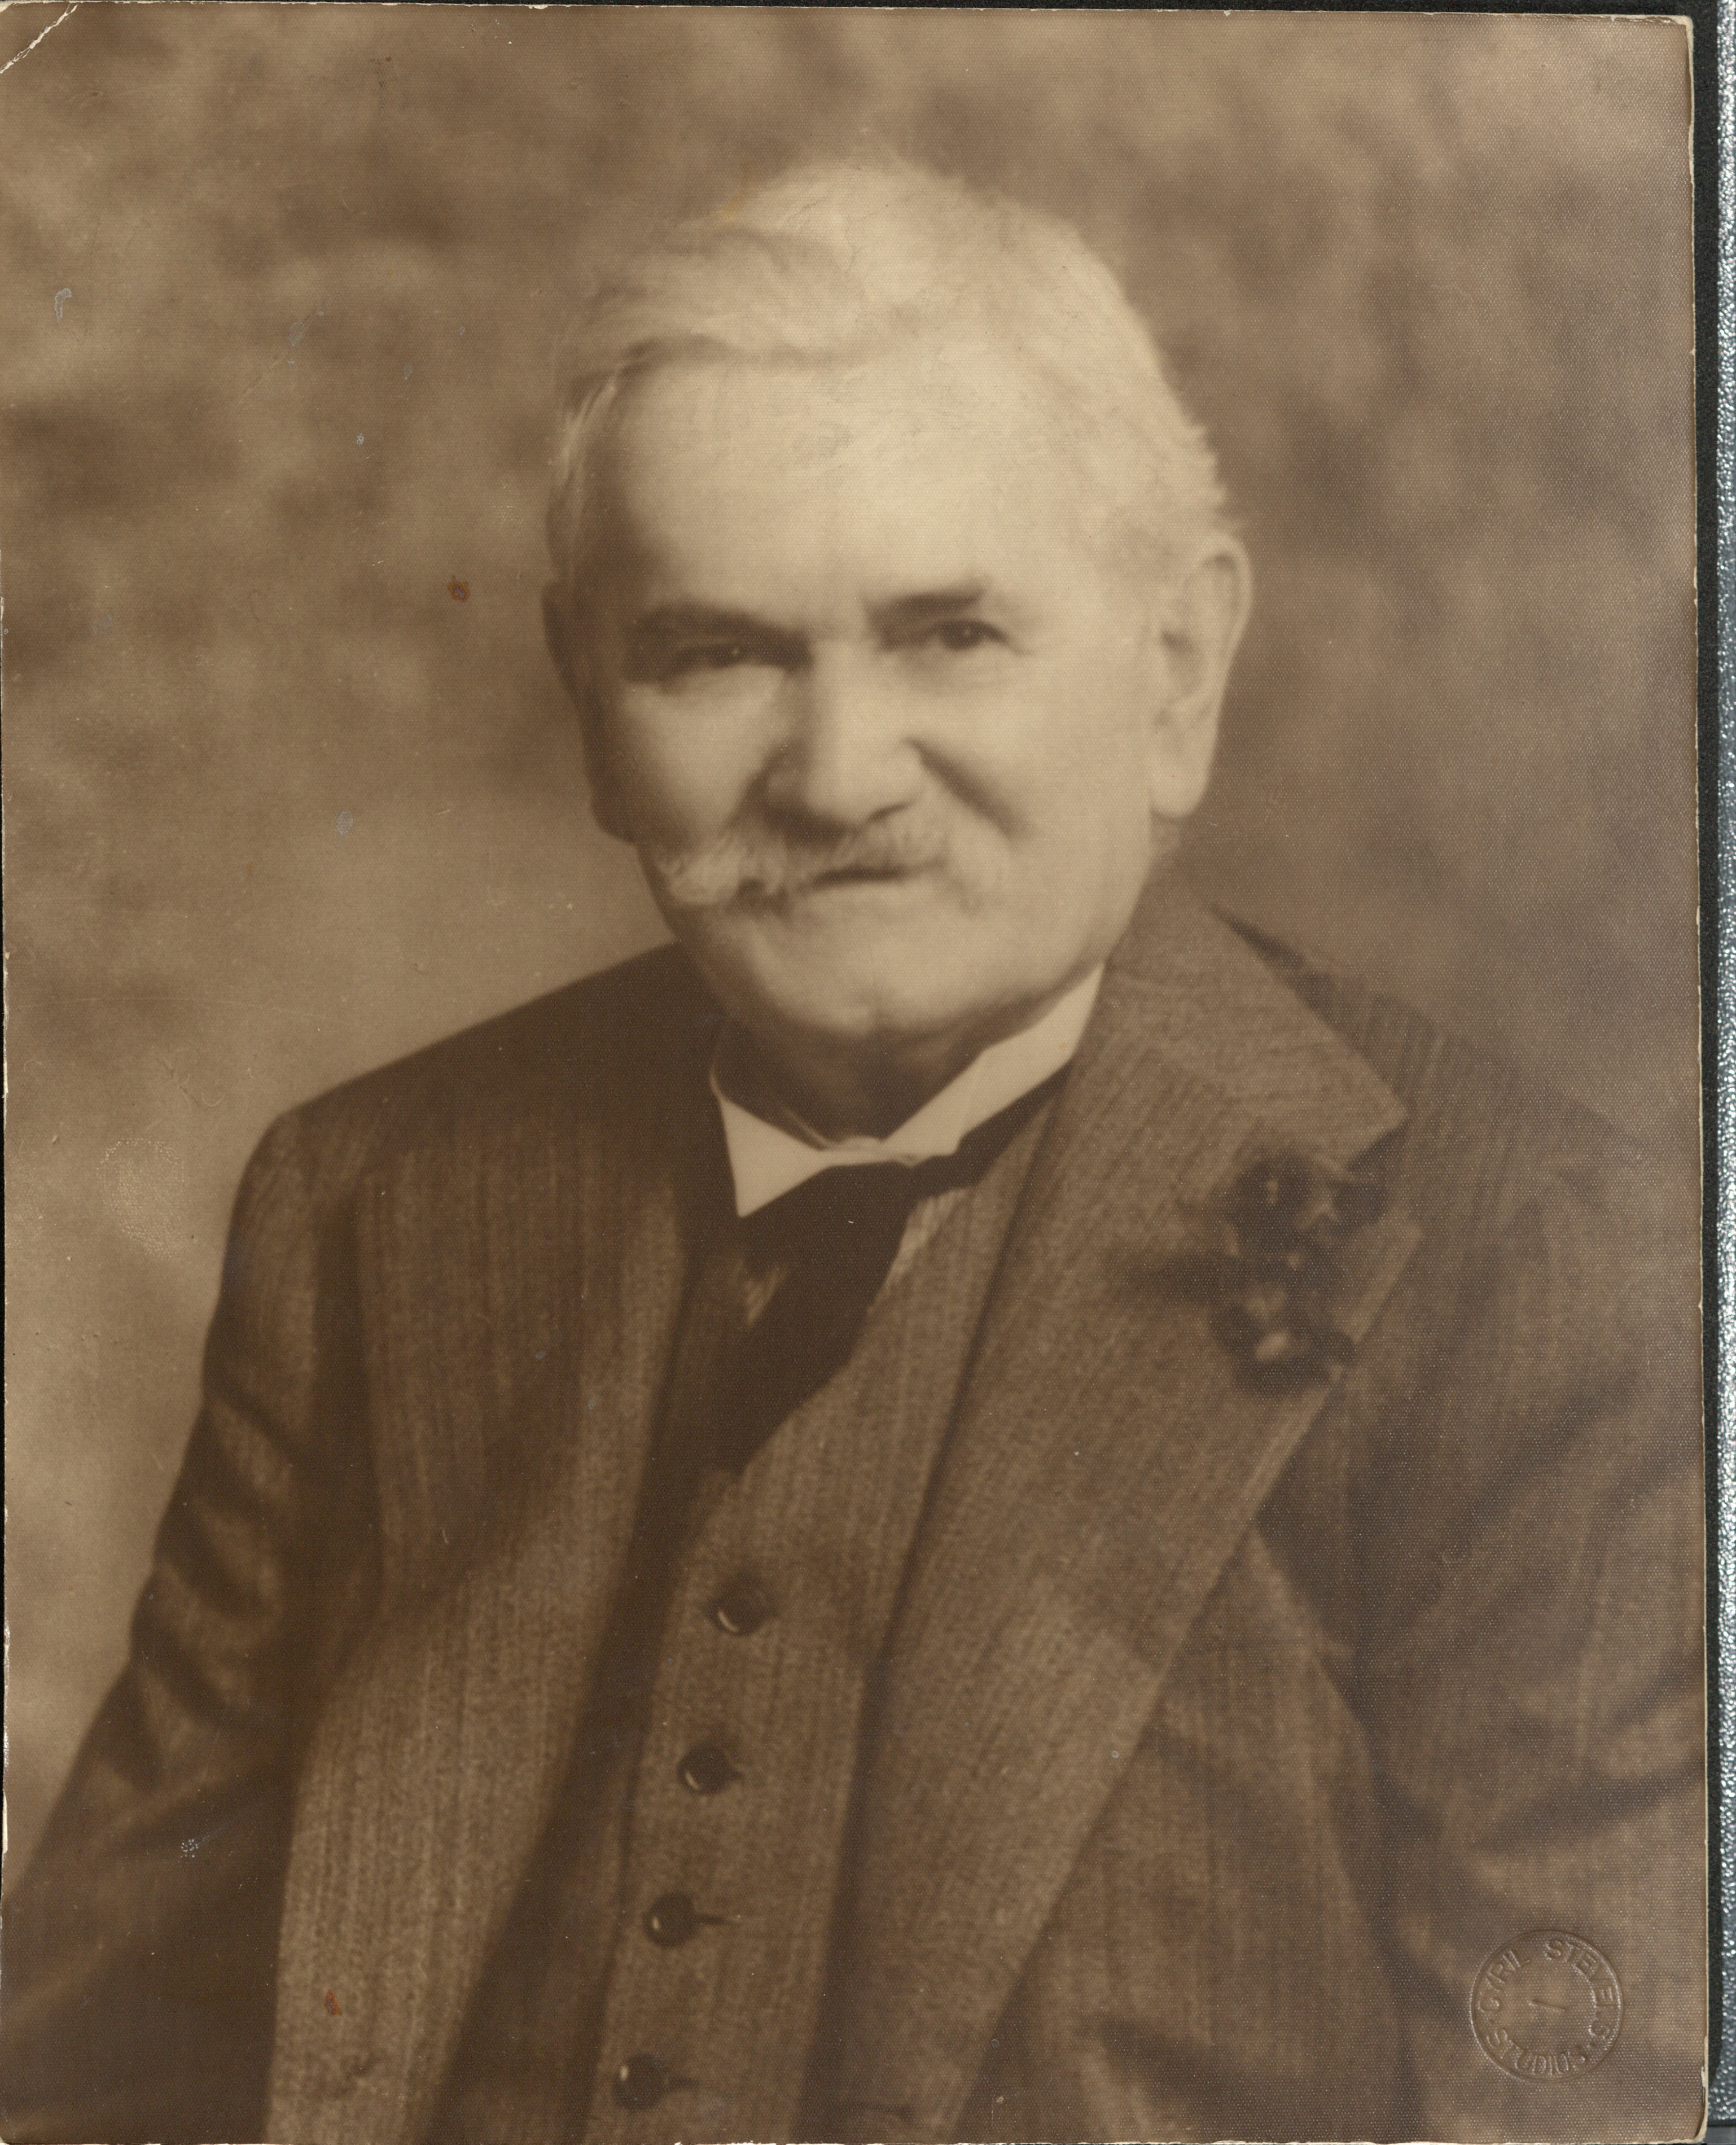 Image of Benjamin Easter Johnson in 1930s [LHRN5321]